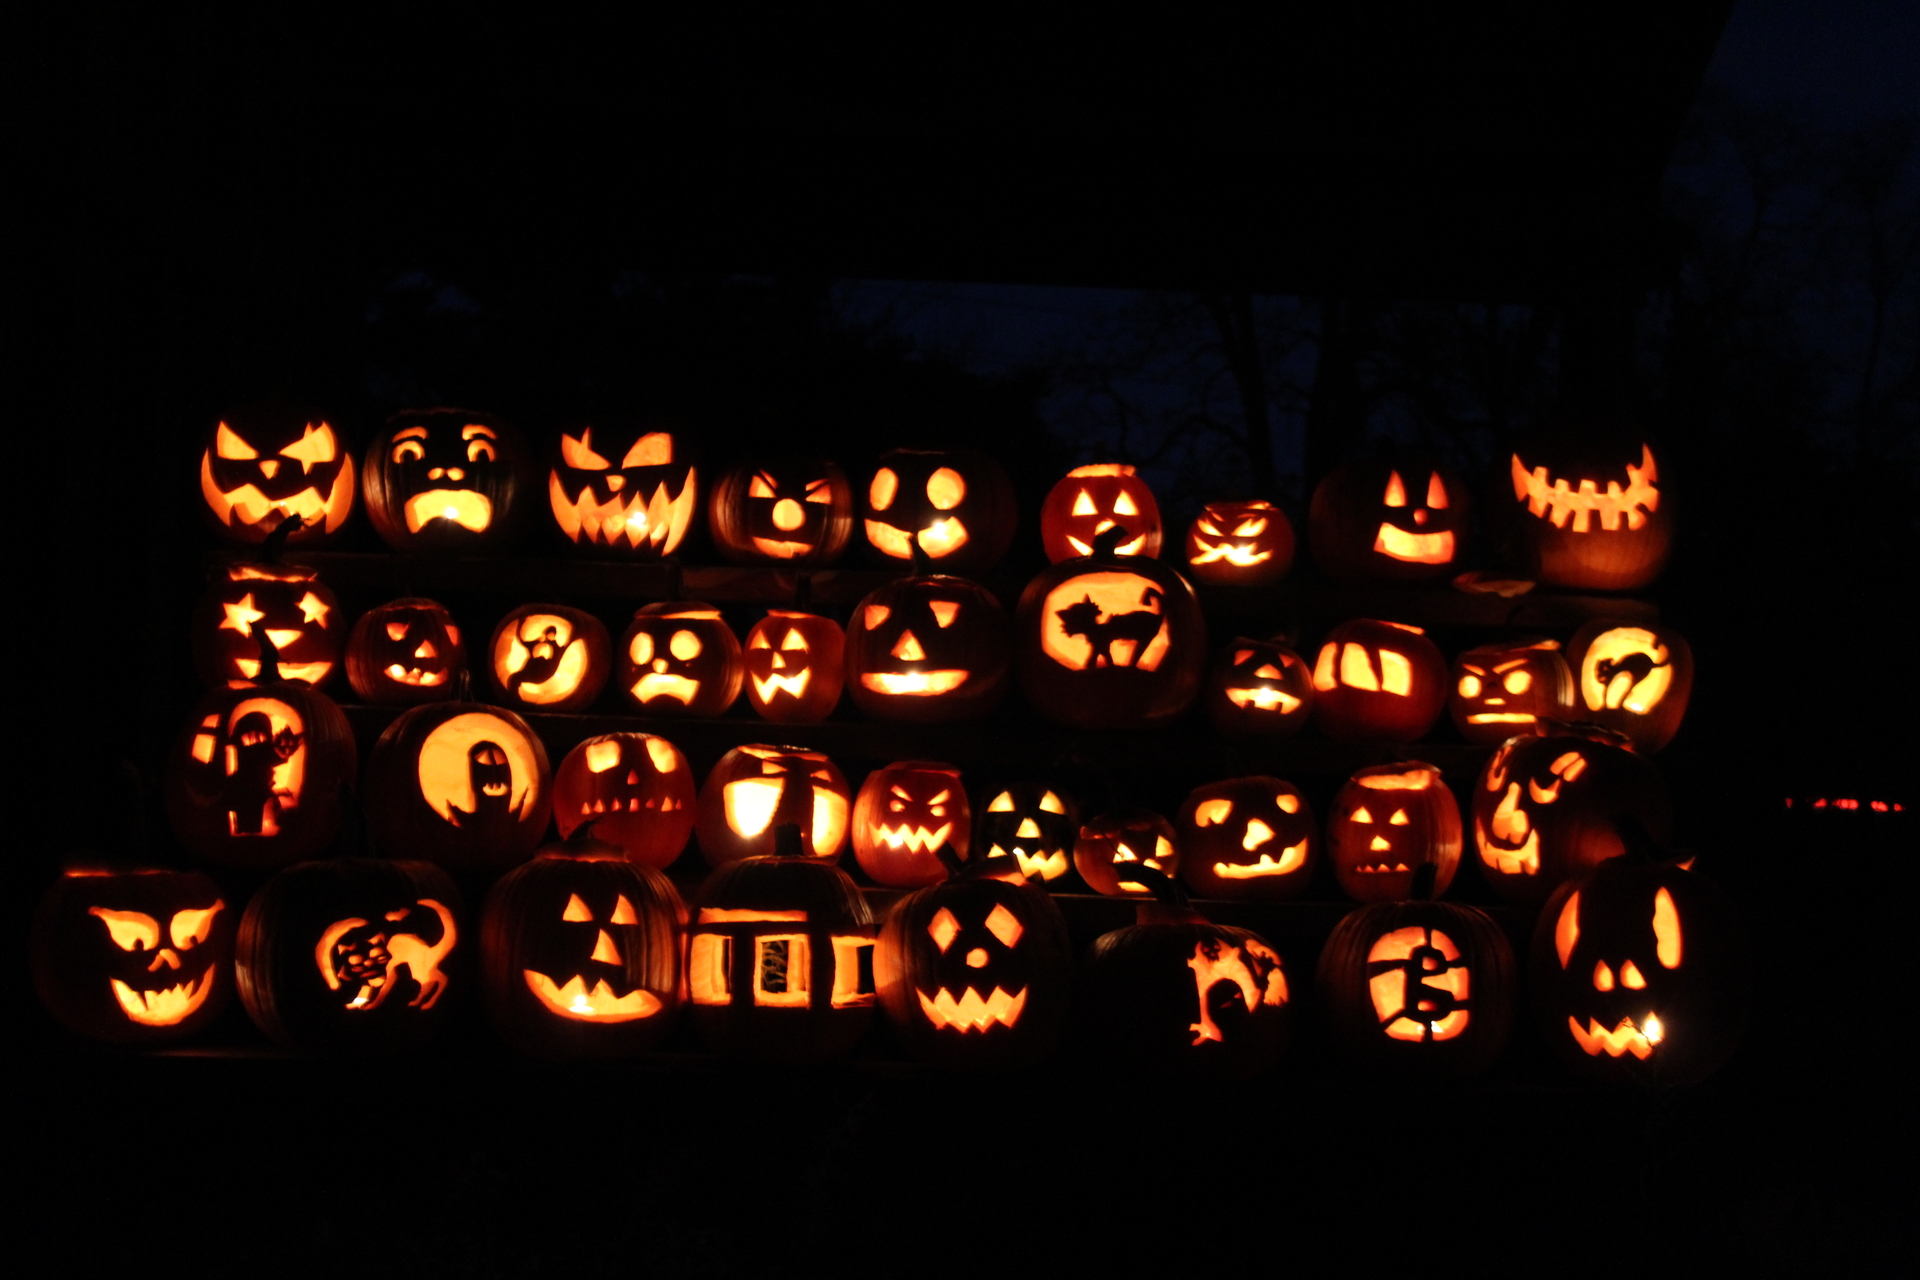 Four rows of jack-o-lanterns glow on a black background.